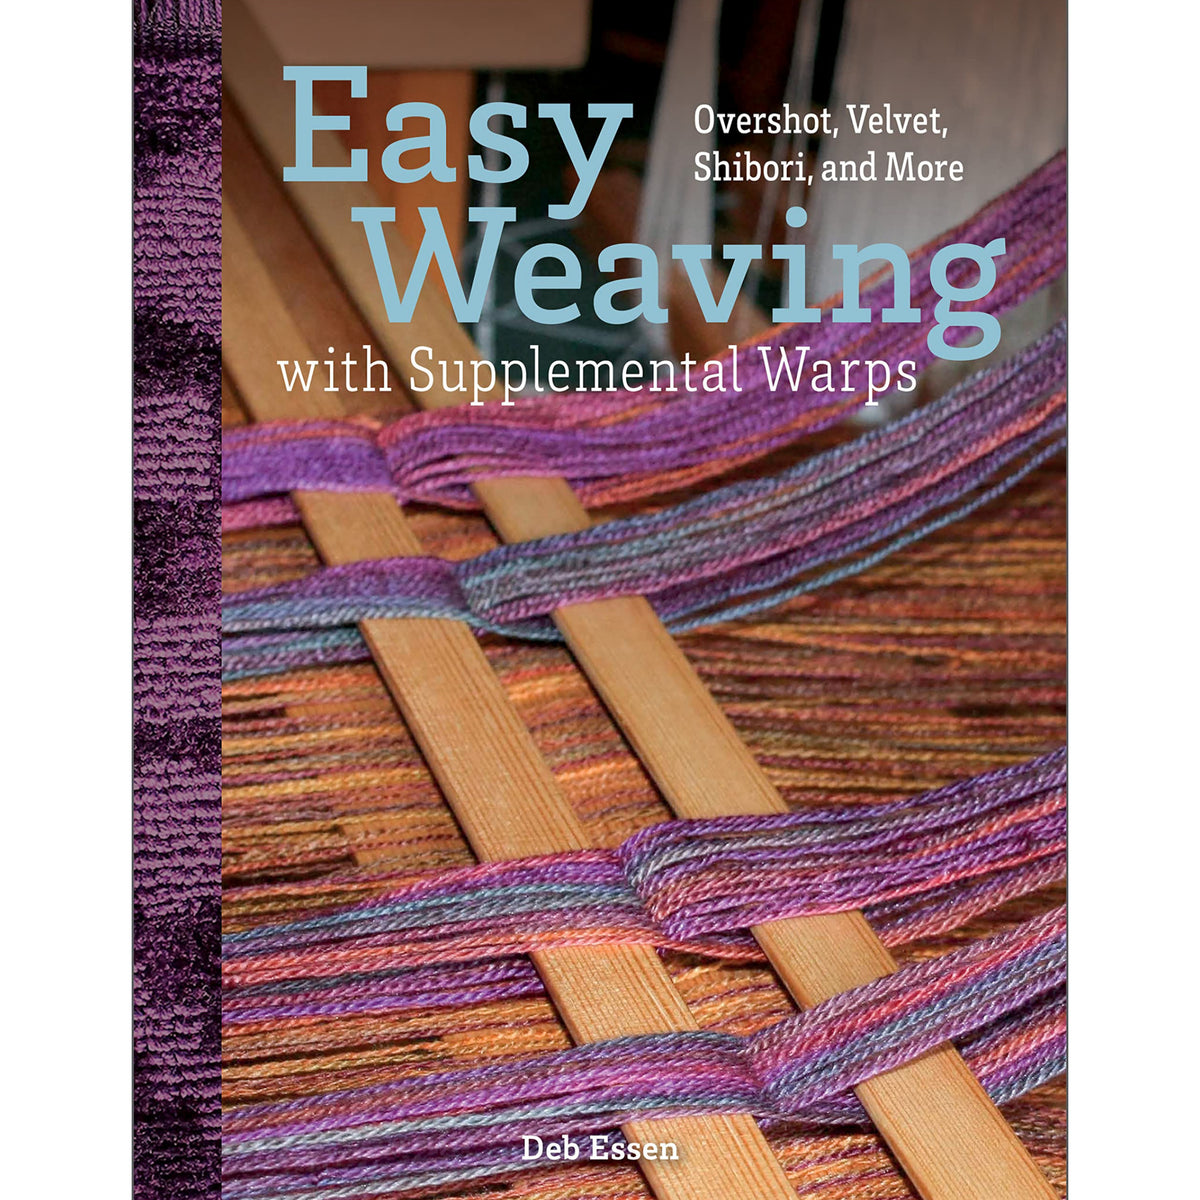 Easy Weaving with Supplemental Warps by Deb Essen - Thread Collective Australia